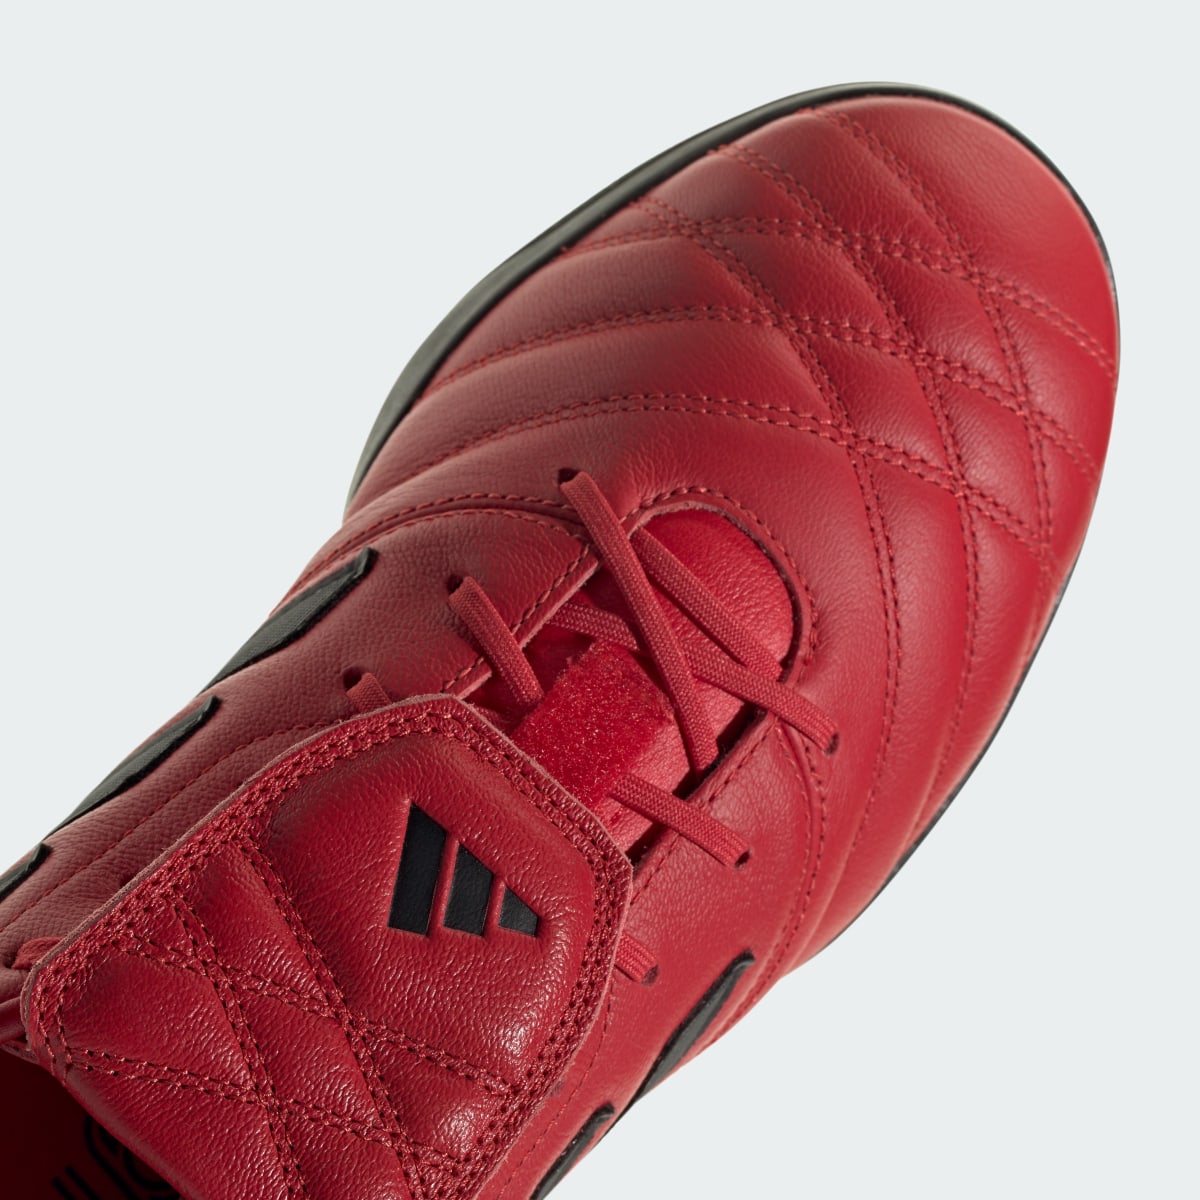 Adidas Copa Gloro Turf Boots. 9